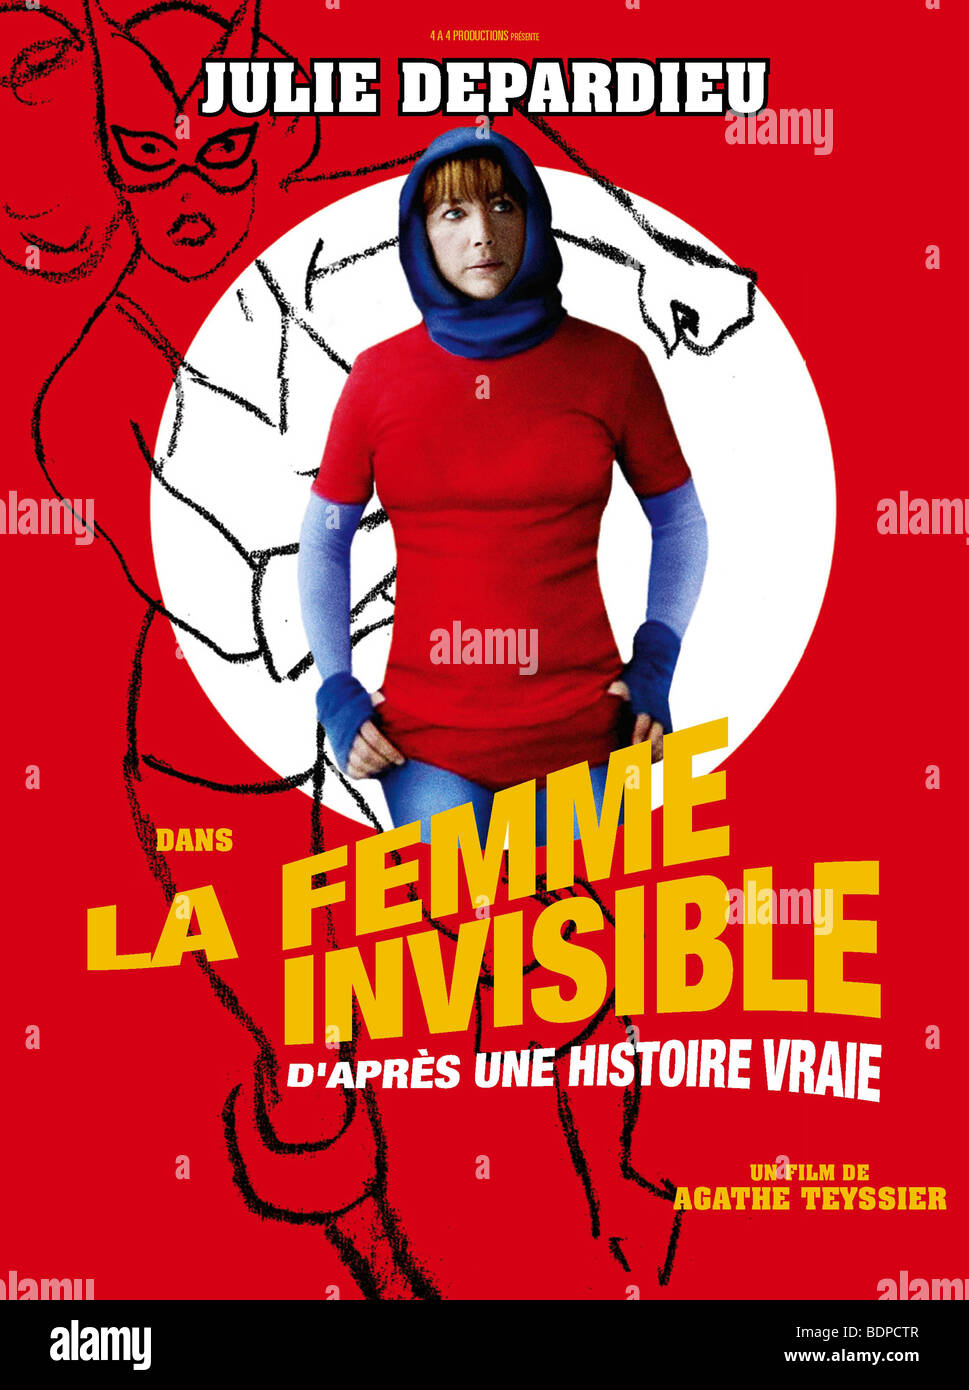 La femme invisible Año : 2009 Director : Agathe Teyssier Julie Depardieu póster de película (Fr) Foto de stock